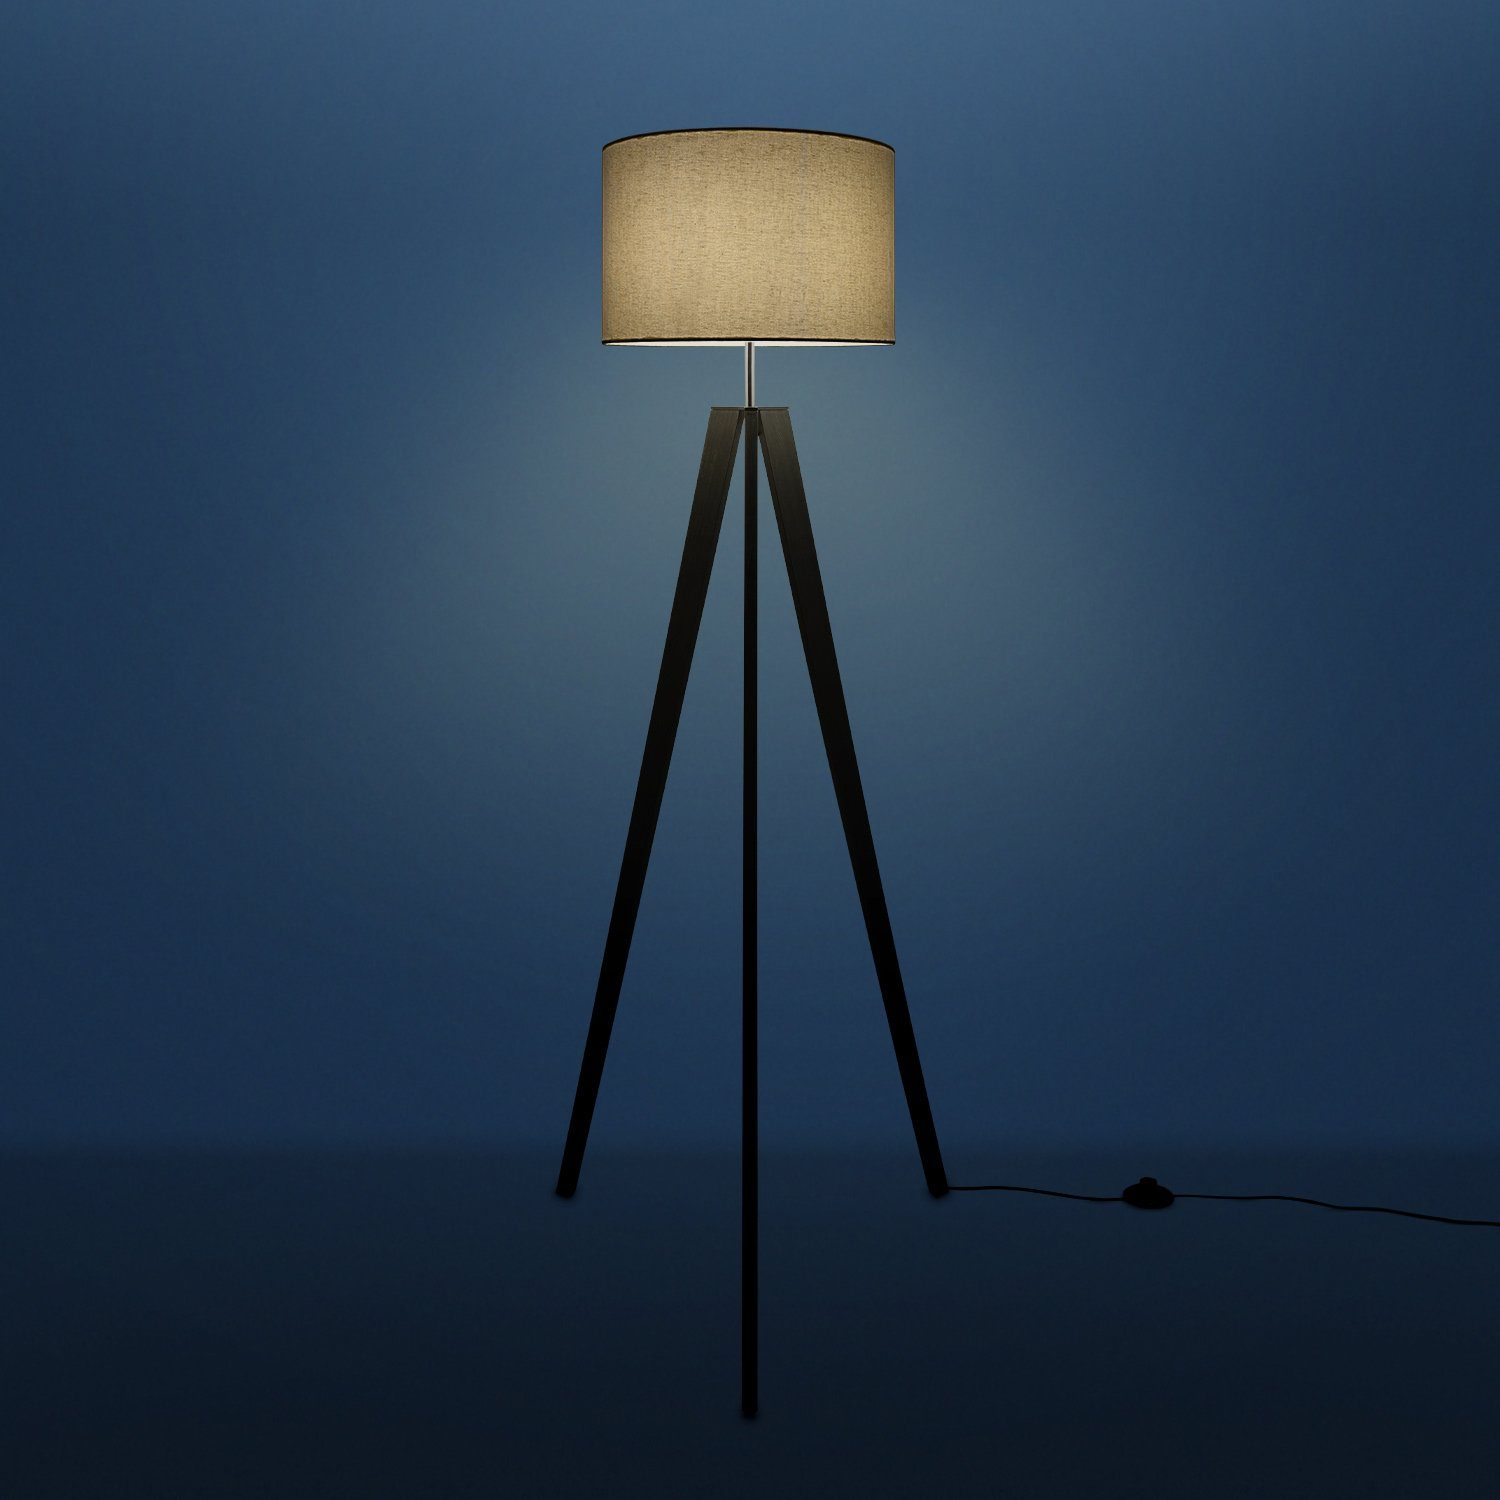 Paco Home Stehlampe Stehlampe Stil ohne uni Color, LED Fuß E27 Wohnzimmer Canvas Skandinavischer Leuchtmittel, Lampe Vintage